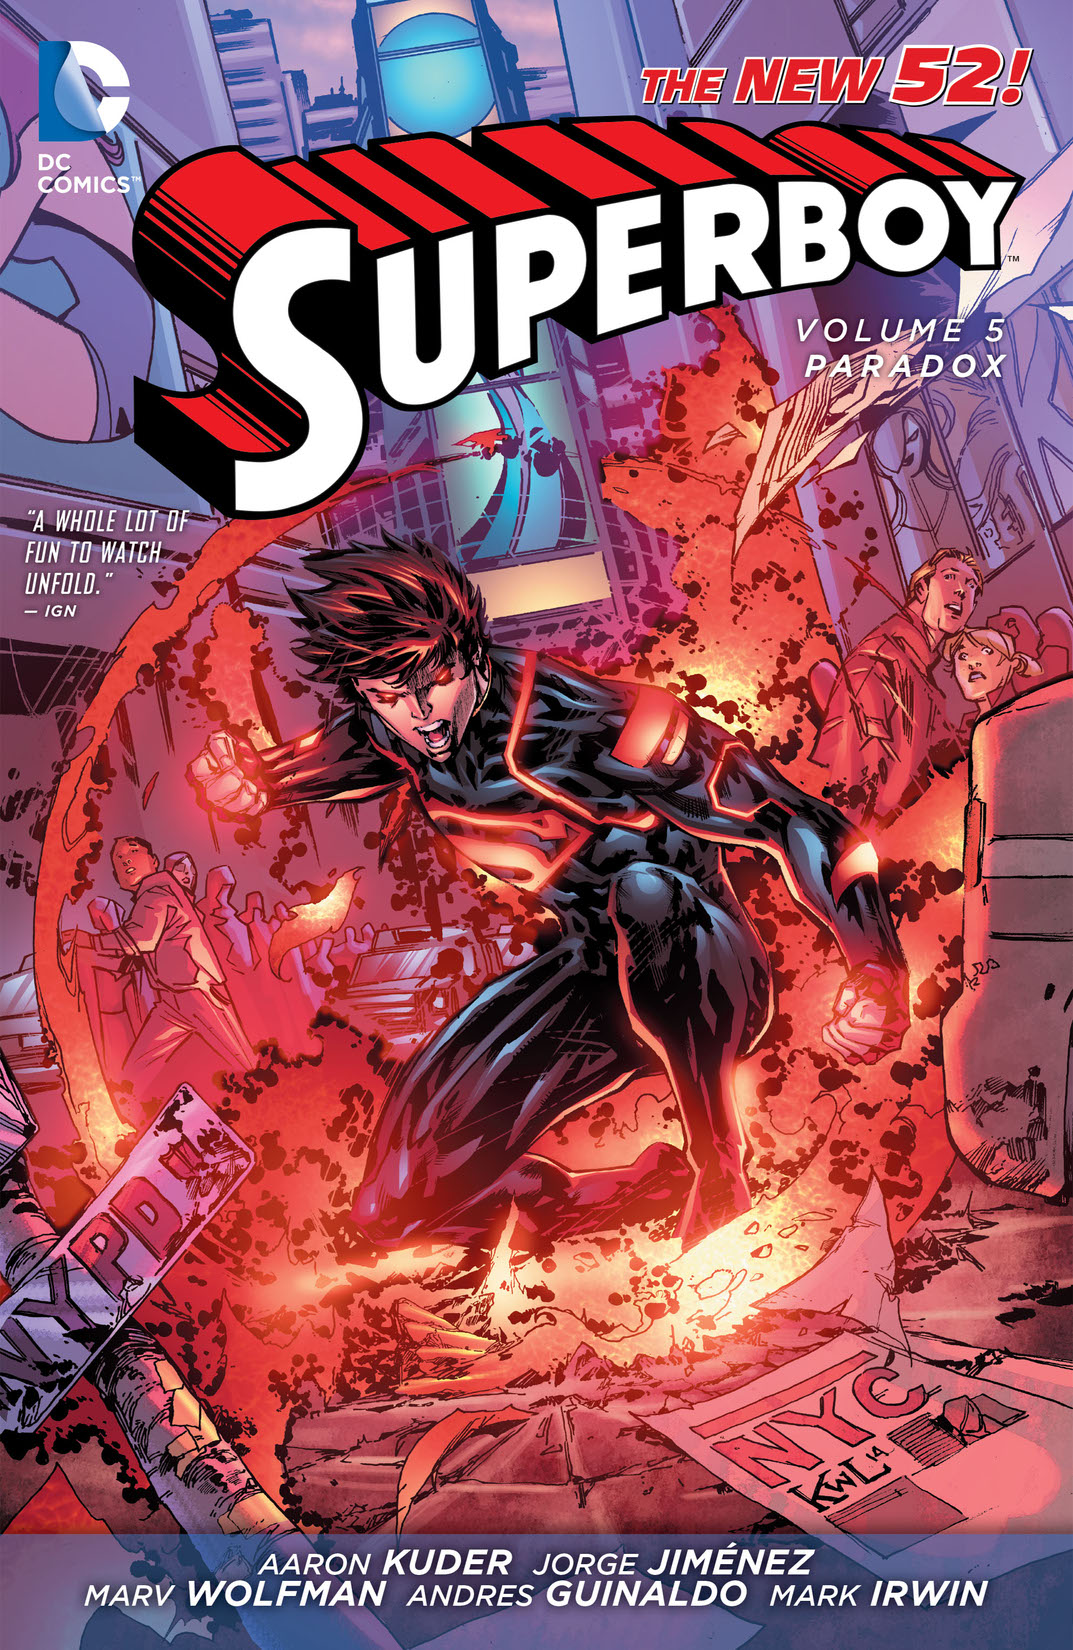 Superboy Vol. 5: Paradox preview images